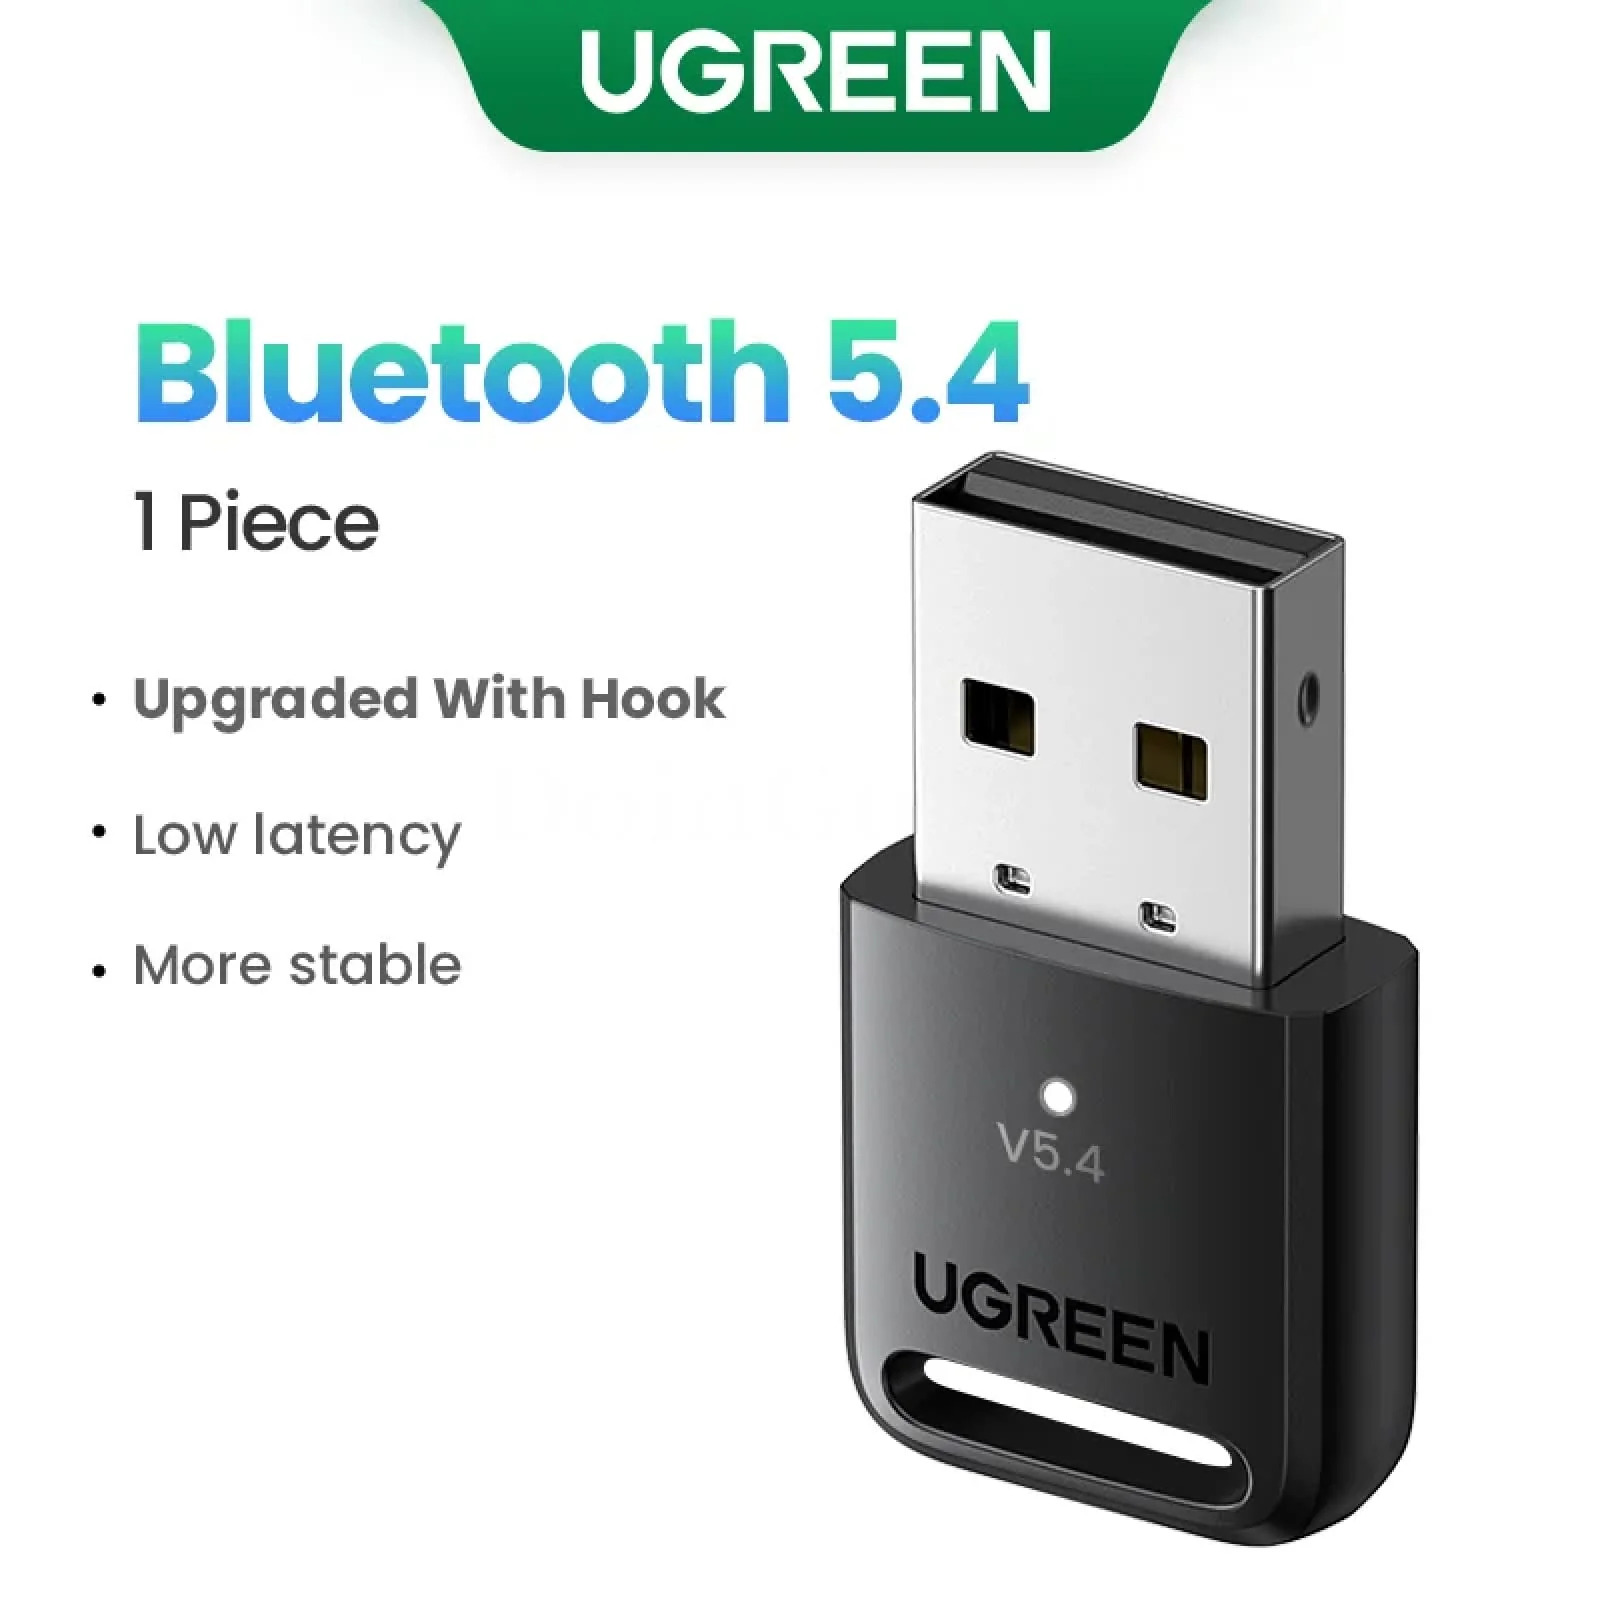 Ugreen USB Bluetooth 5.0 Dongle Adapter PC Wireless Audio Receiver Transmitter